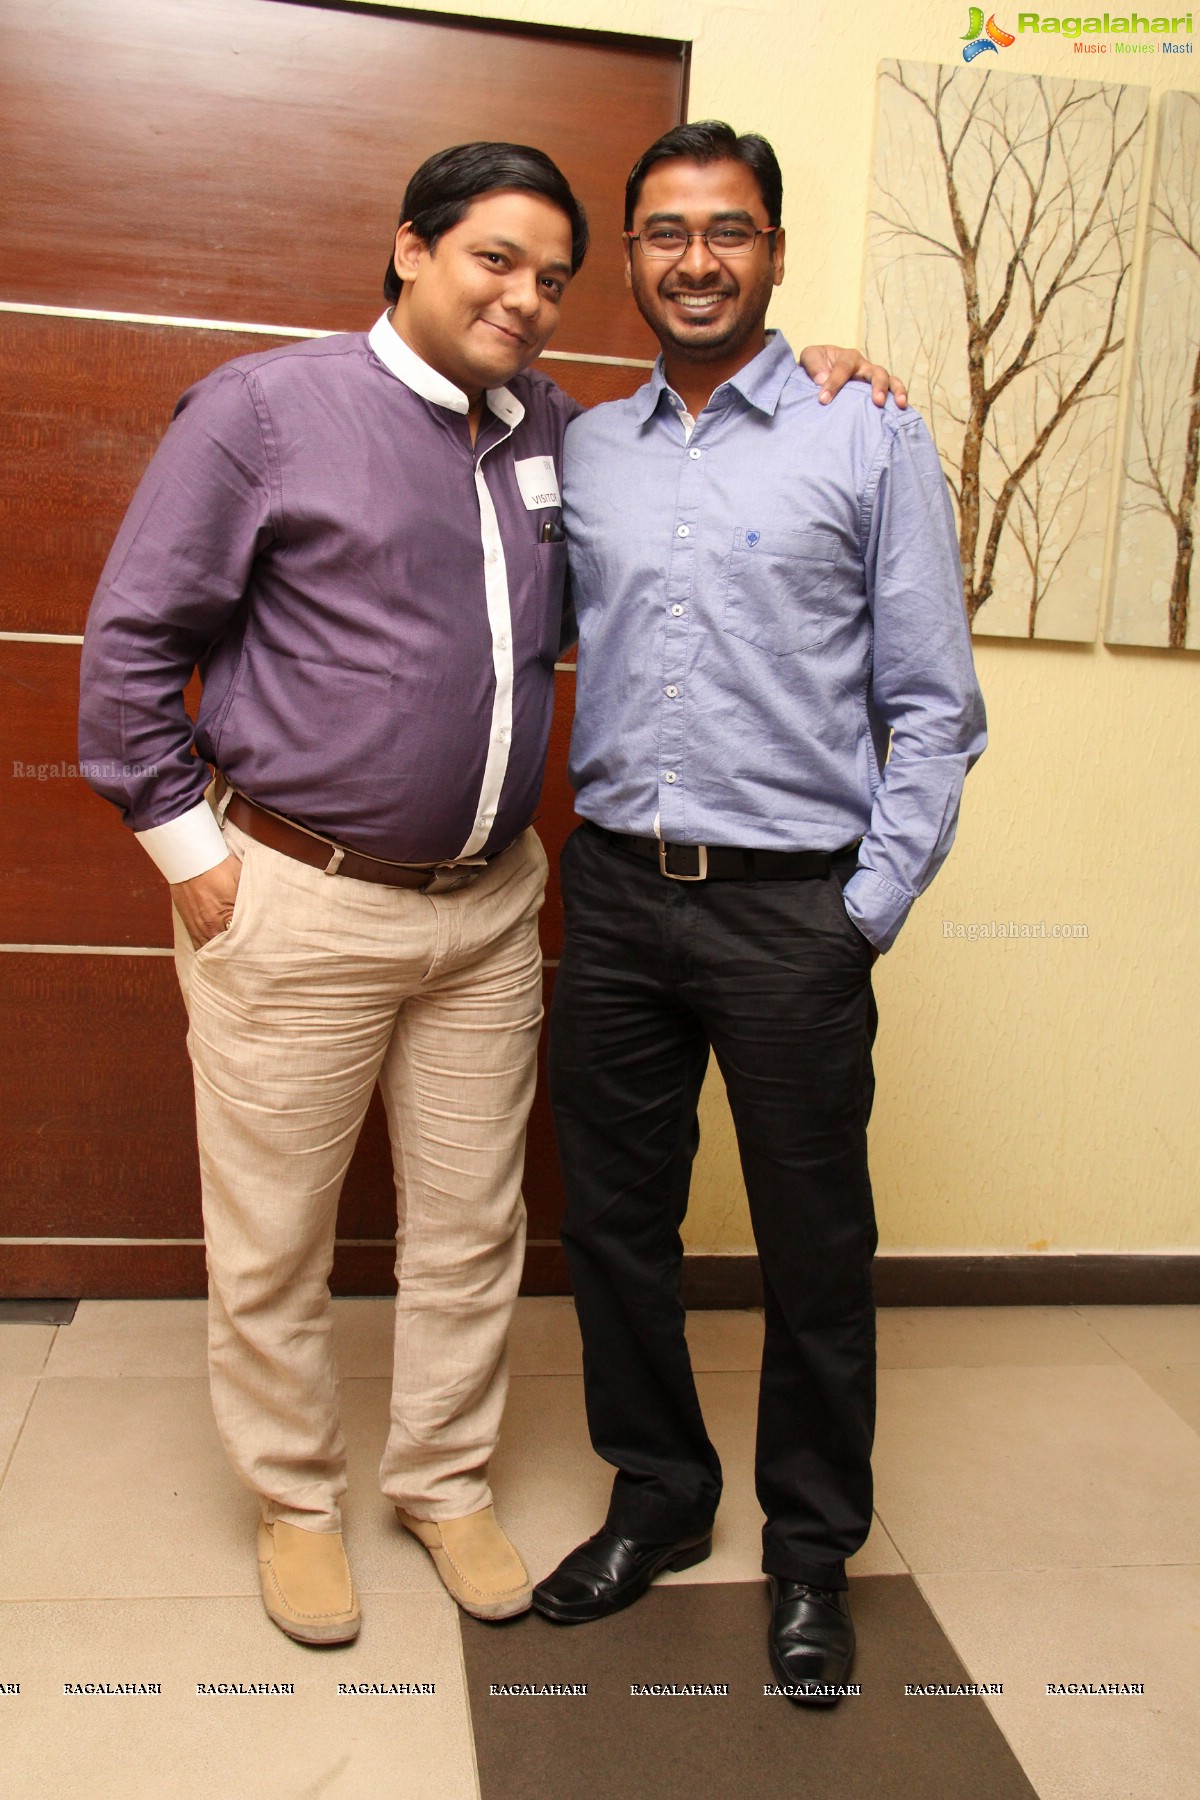 BNI Kohinoor Meet at Fortune Park Vallabha, Hyderabad (August 6, 2014)